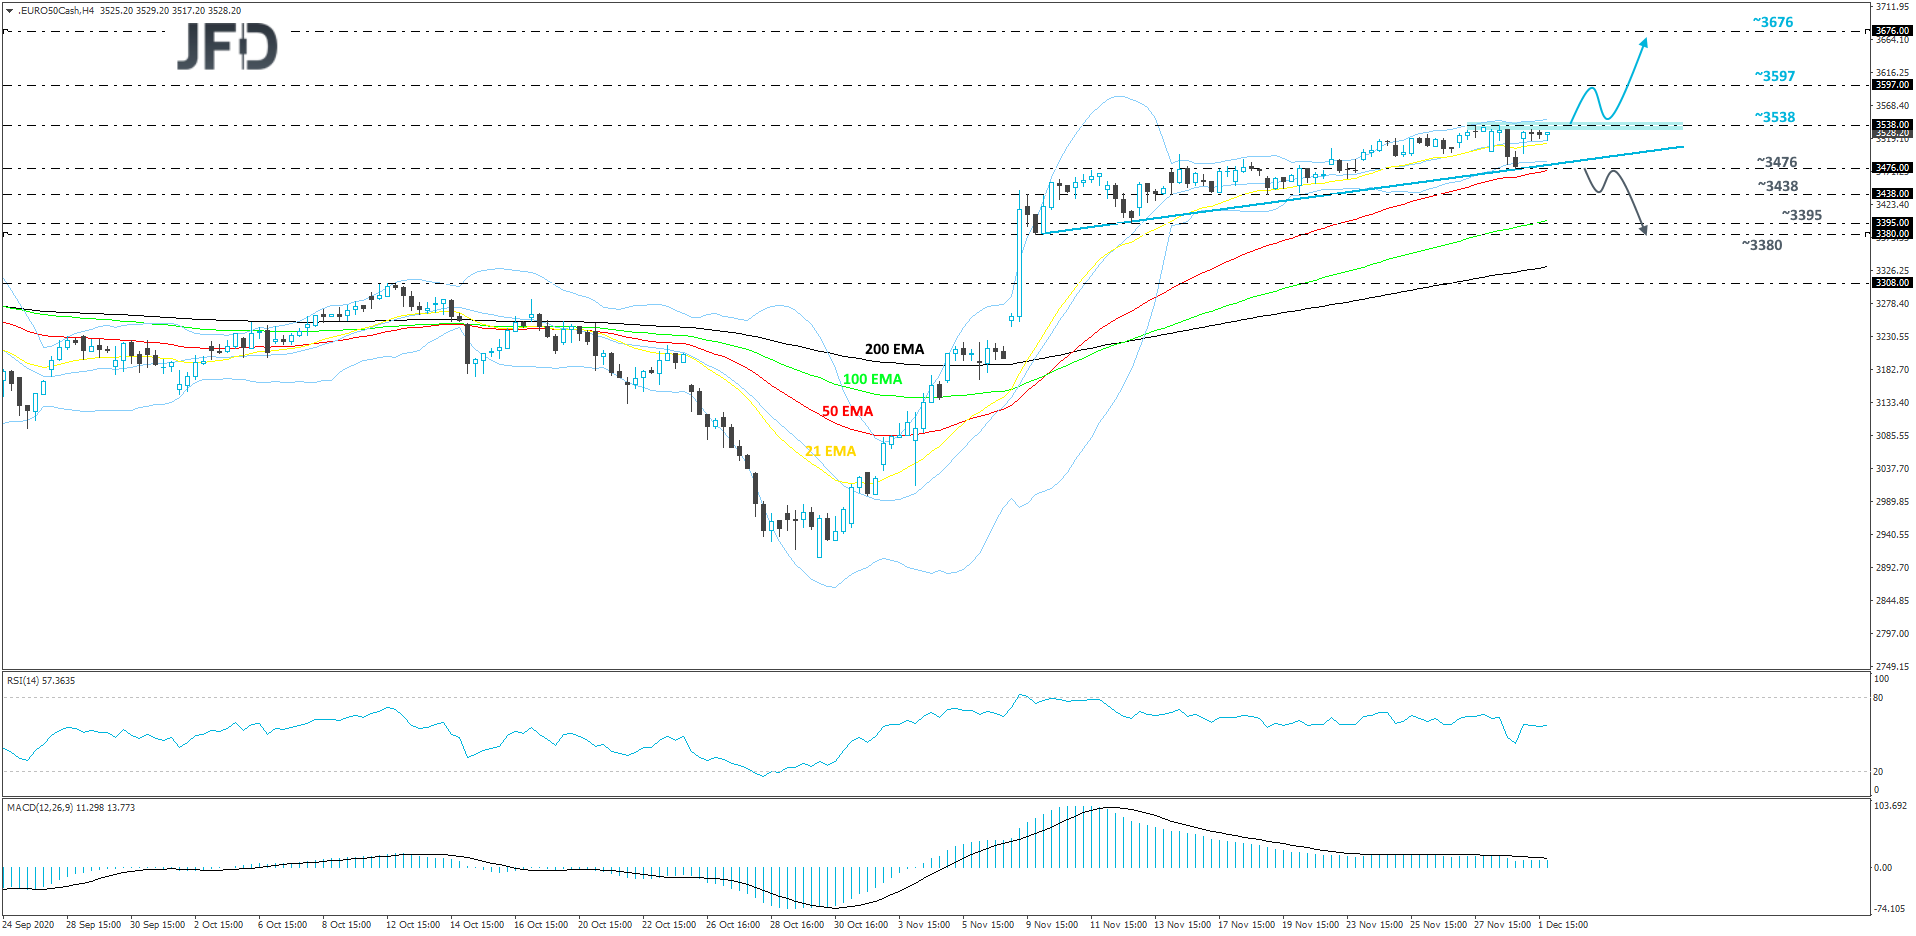 Euro Stoxx 4-hour chart technical analysis